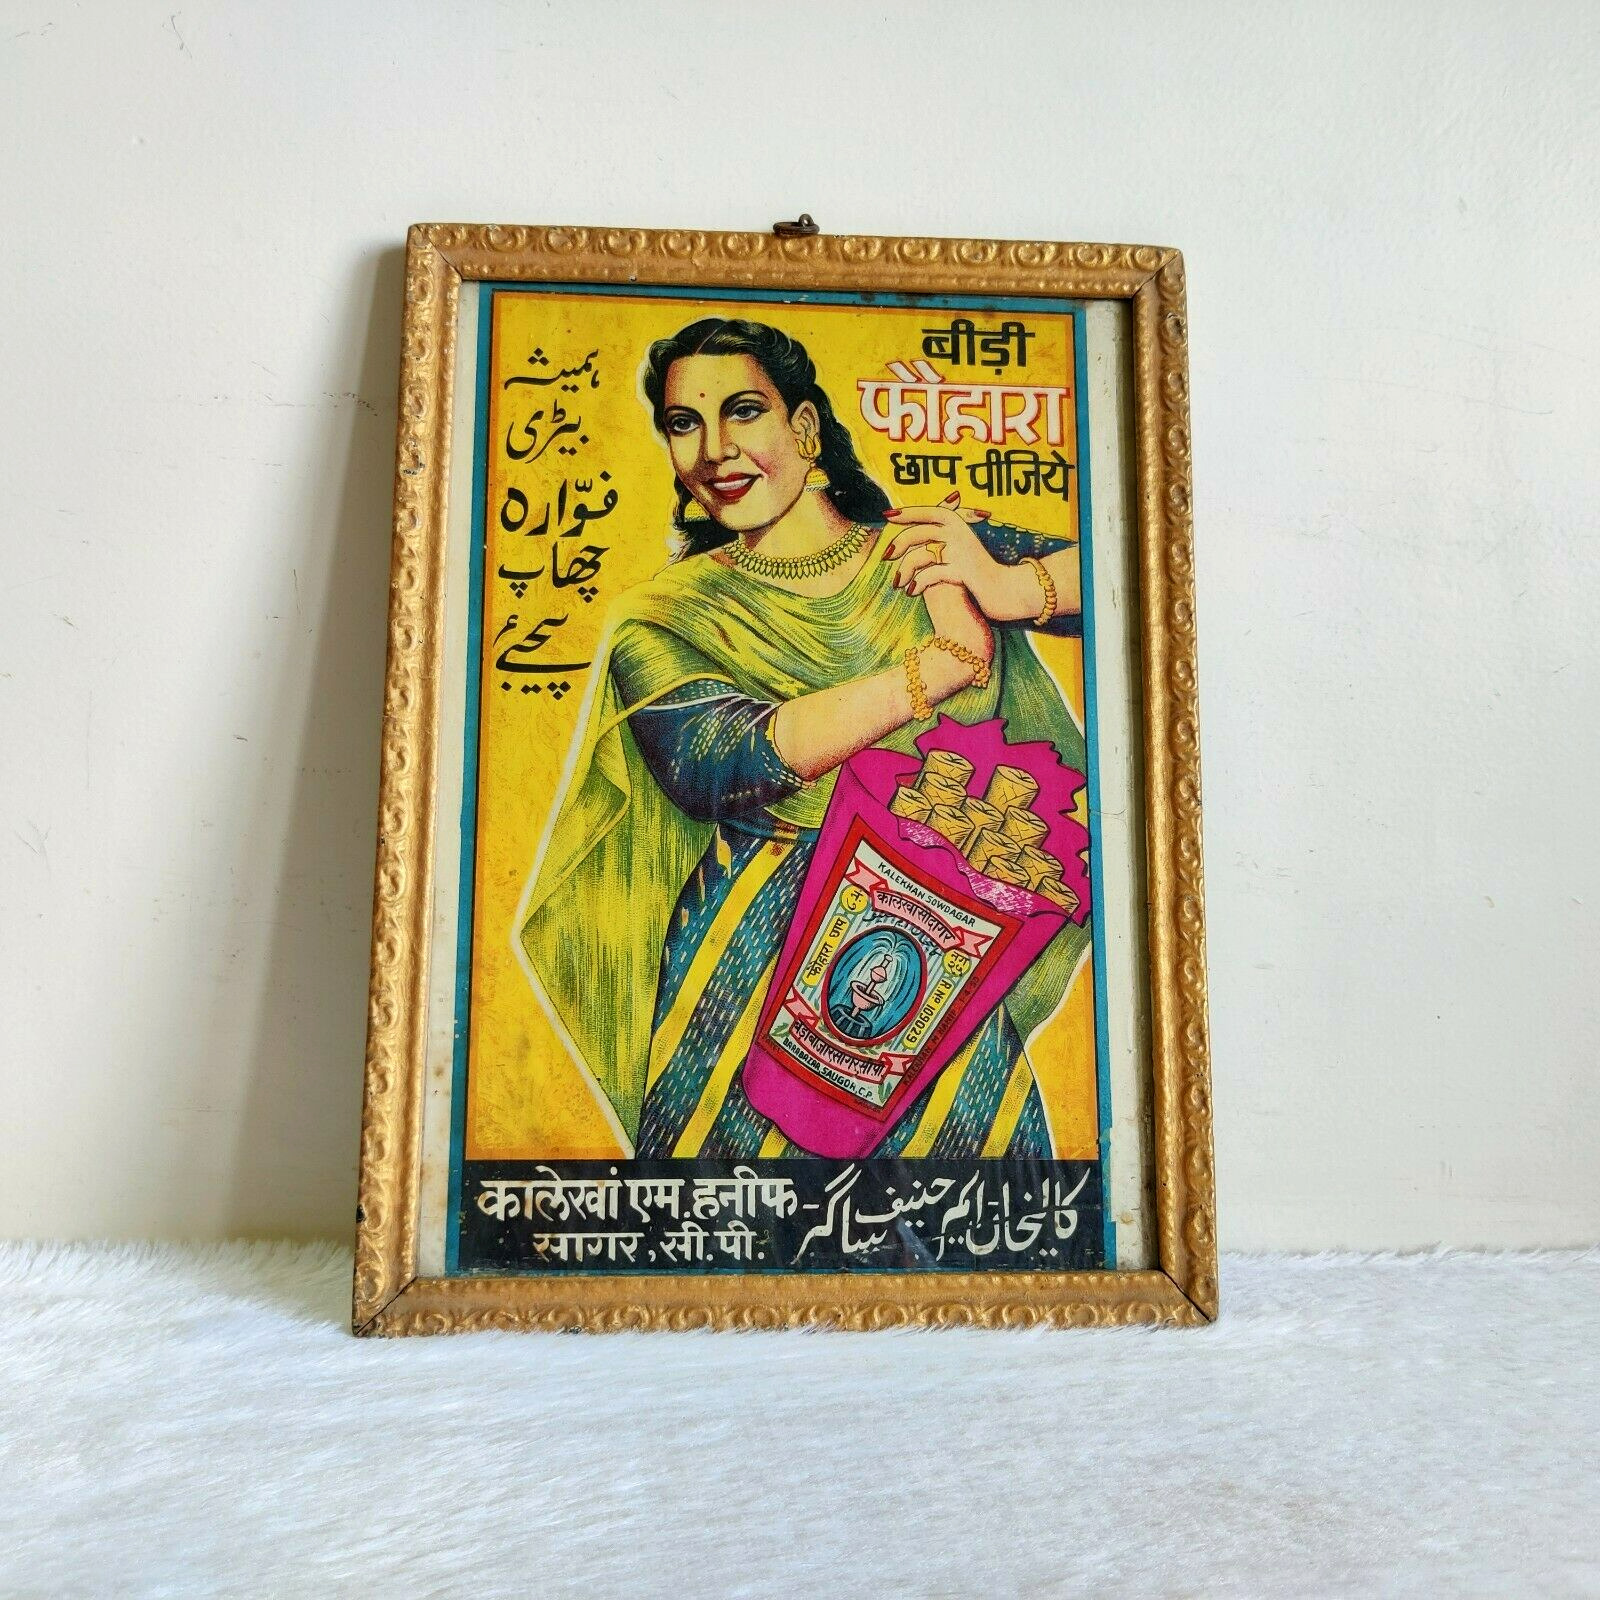 1950s Vintage India Lady Graphics Fohara Fountain Brand Bidi Advertising Print